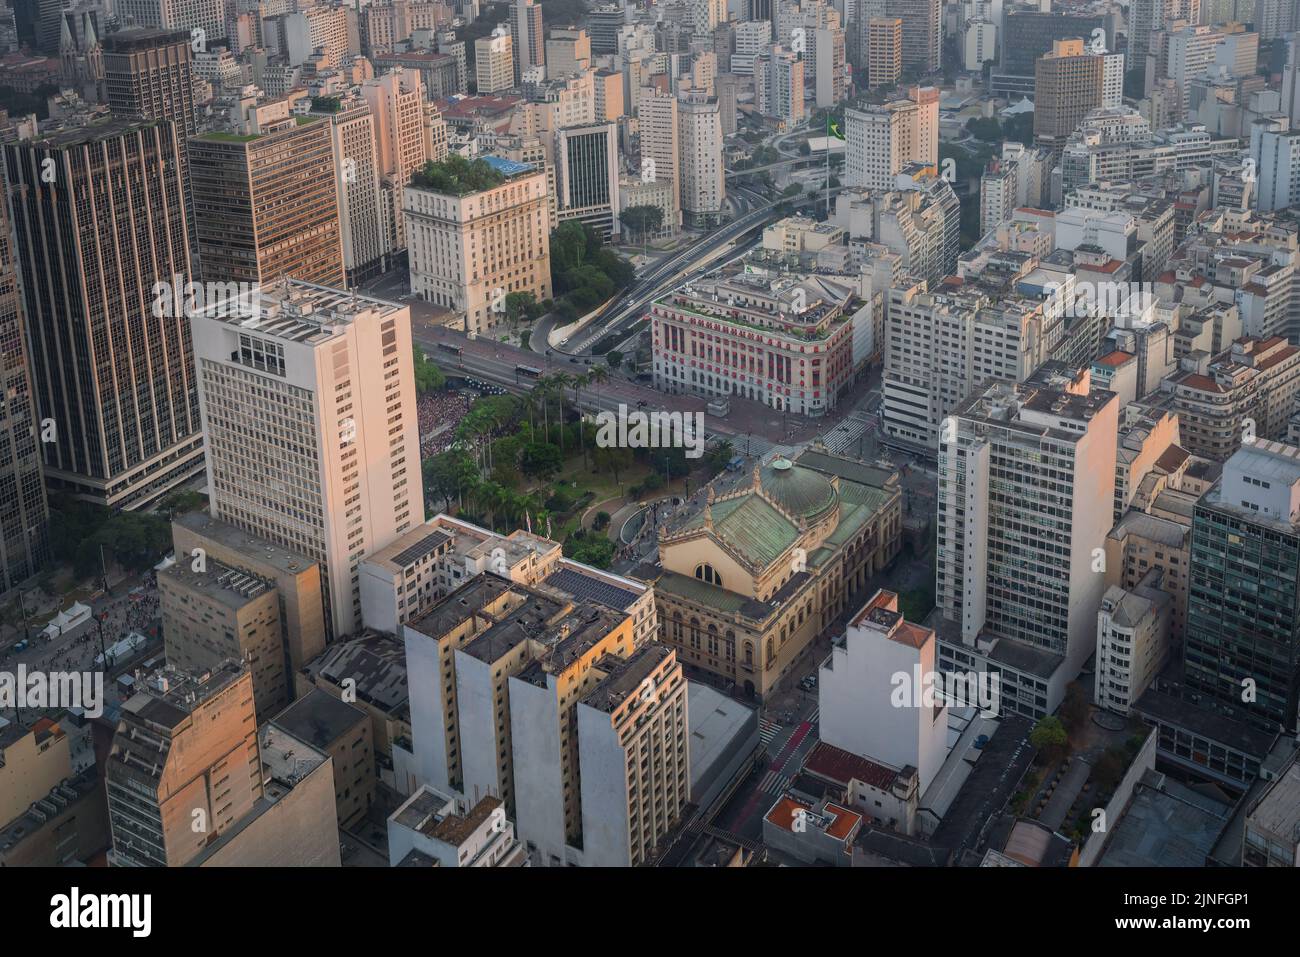 Aerial view of Sao Paulo Historic City Center with Vale do Anhangabau, Viaduto do Cha and Municipal Theatre - Sao Paulo, Brazil Stock Photo